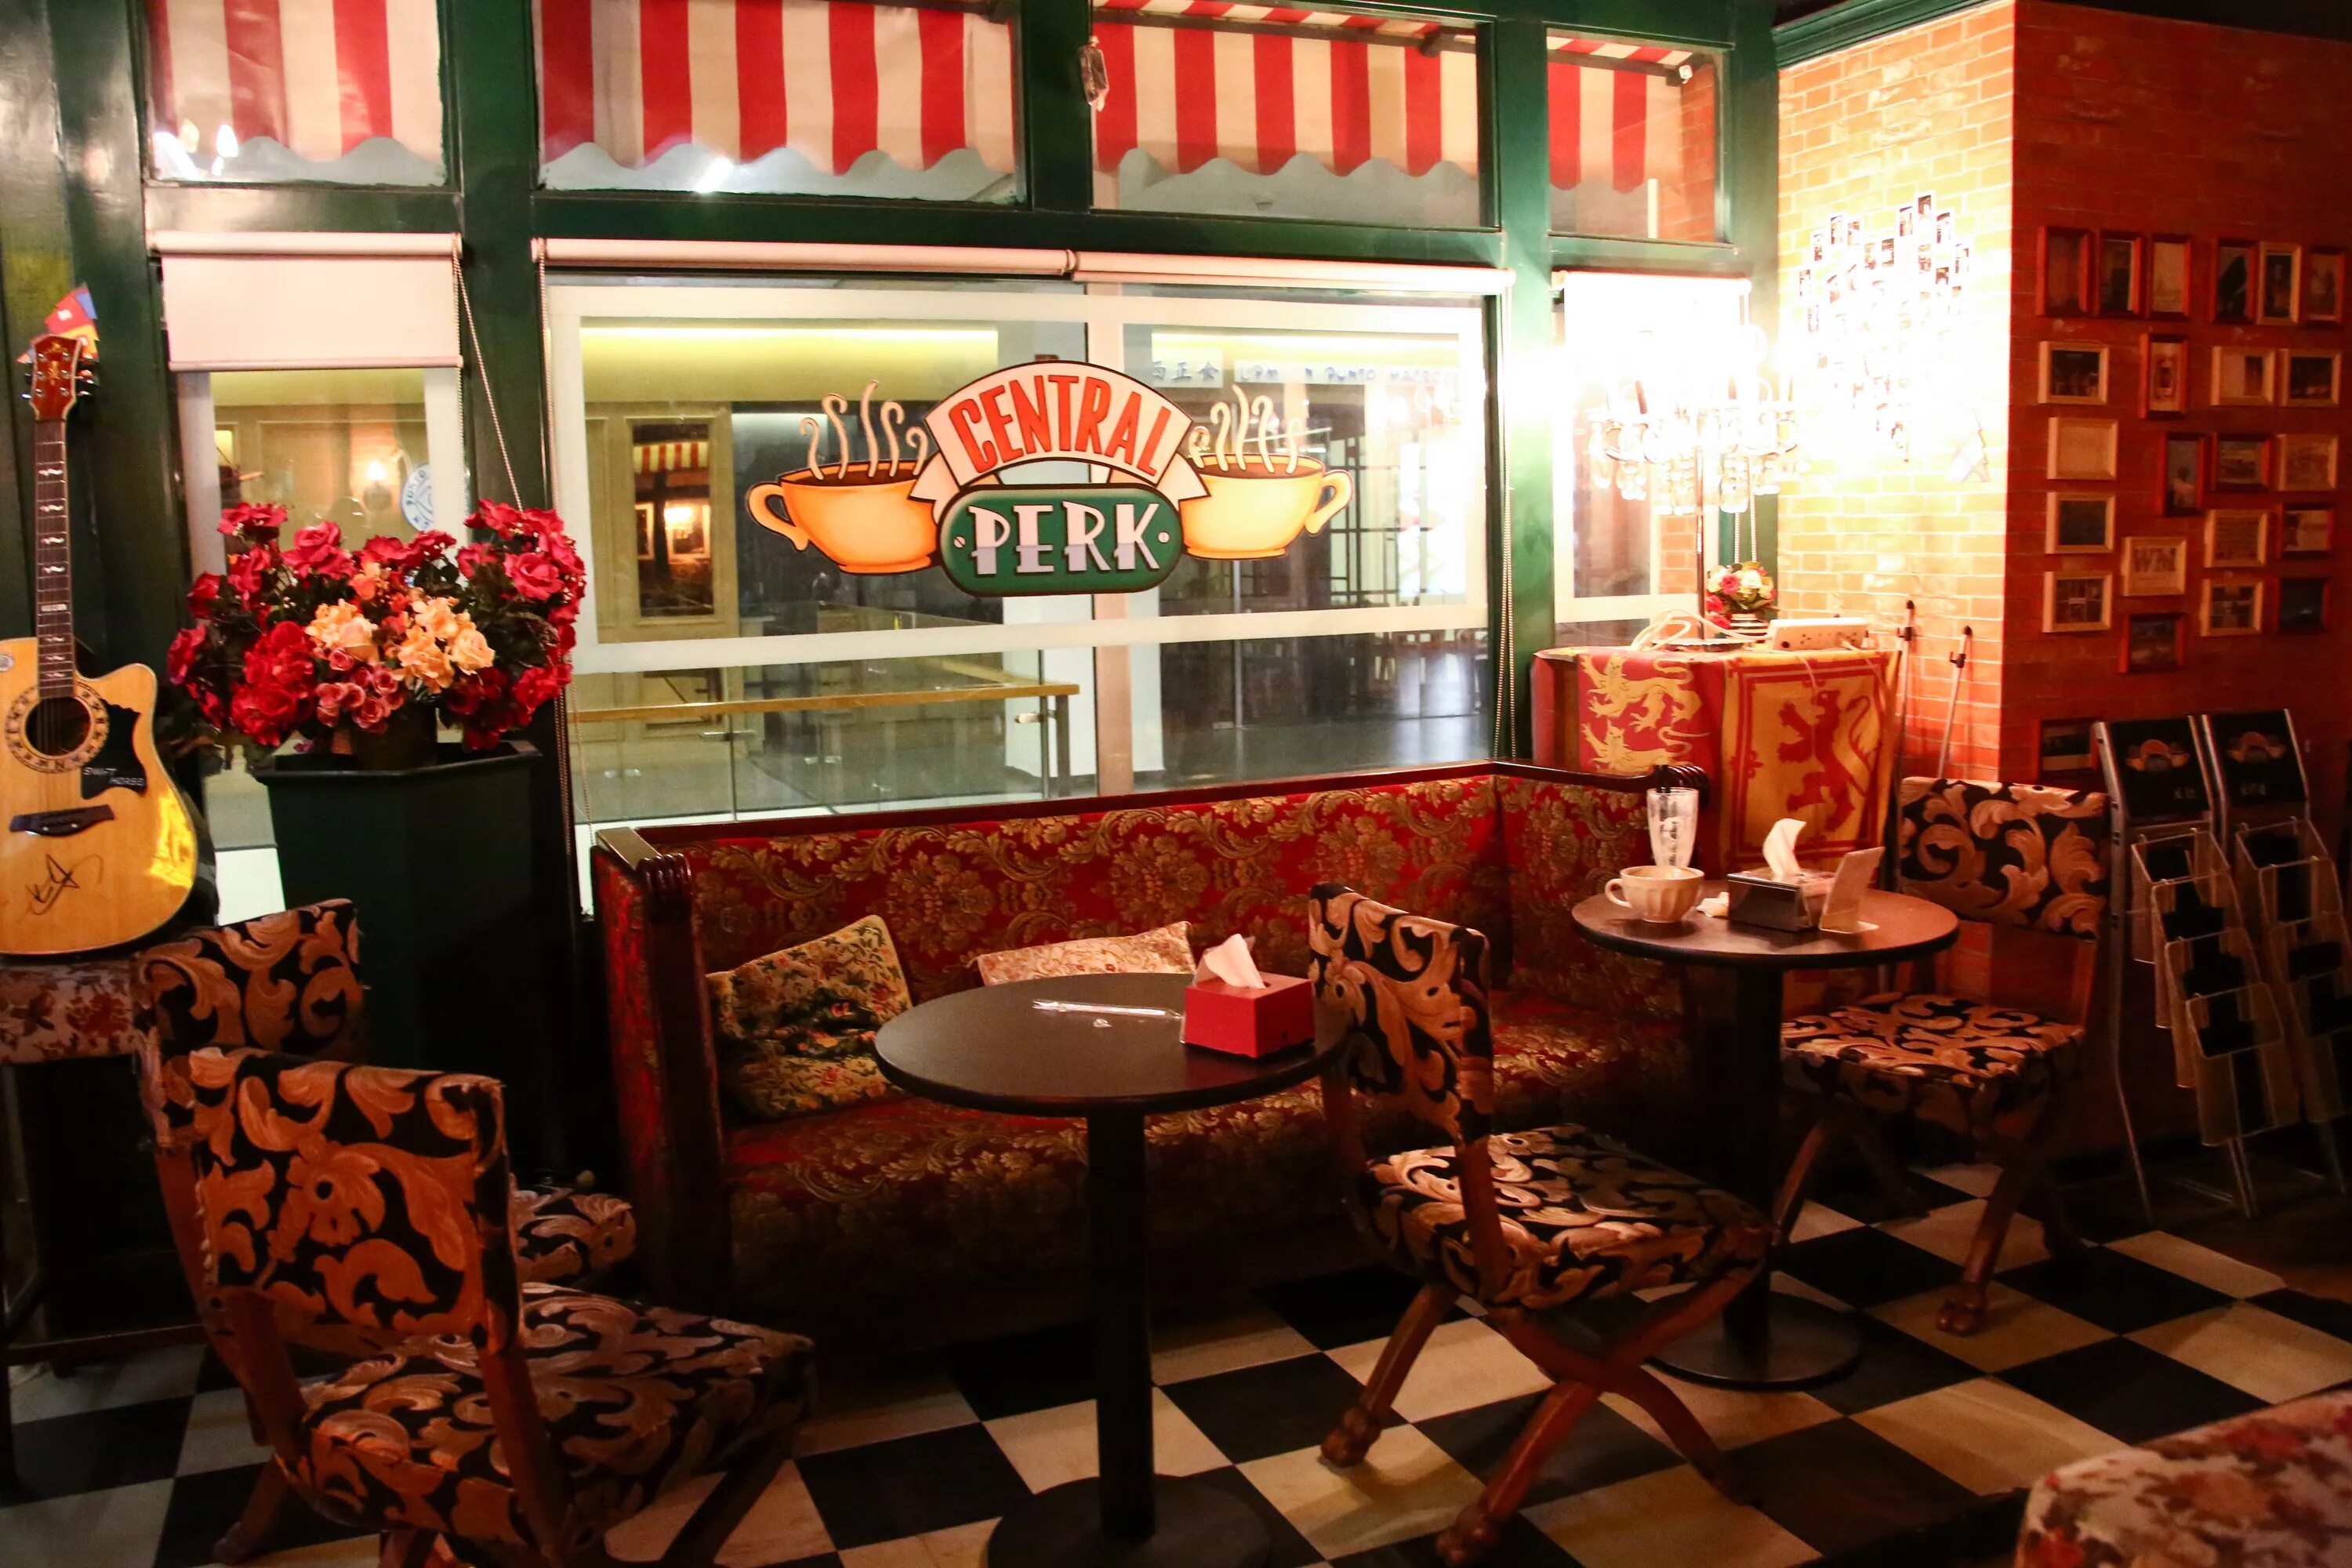 Frenchie cafe. Central Perk кофейня Нью-Йорк. Нью Йорк кафе централ перк.